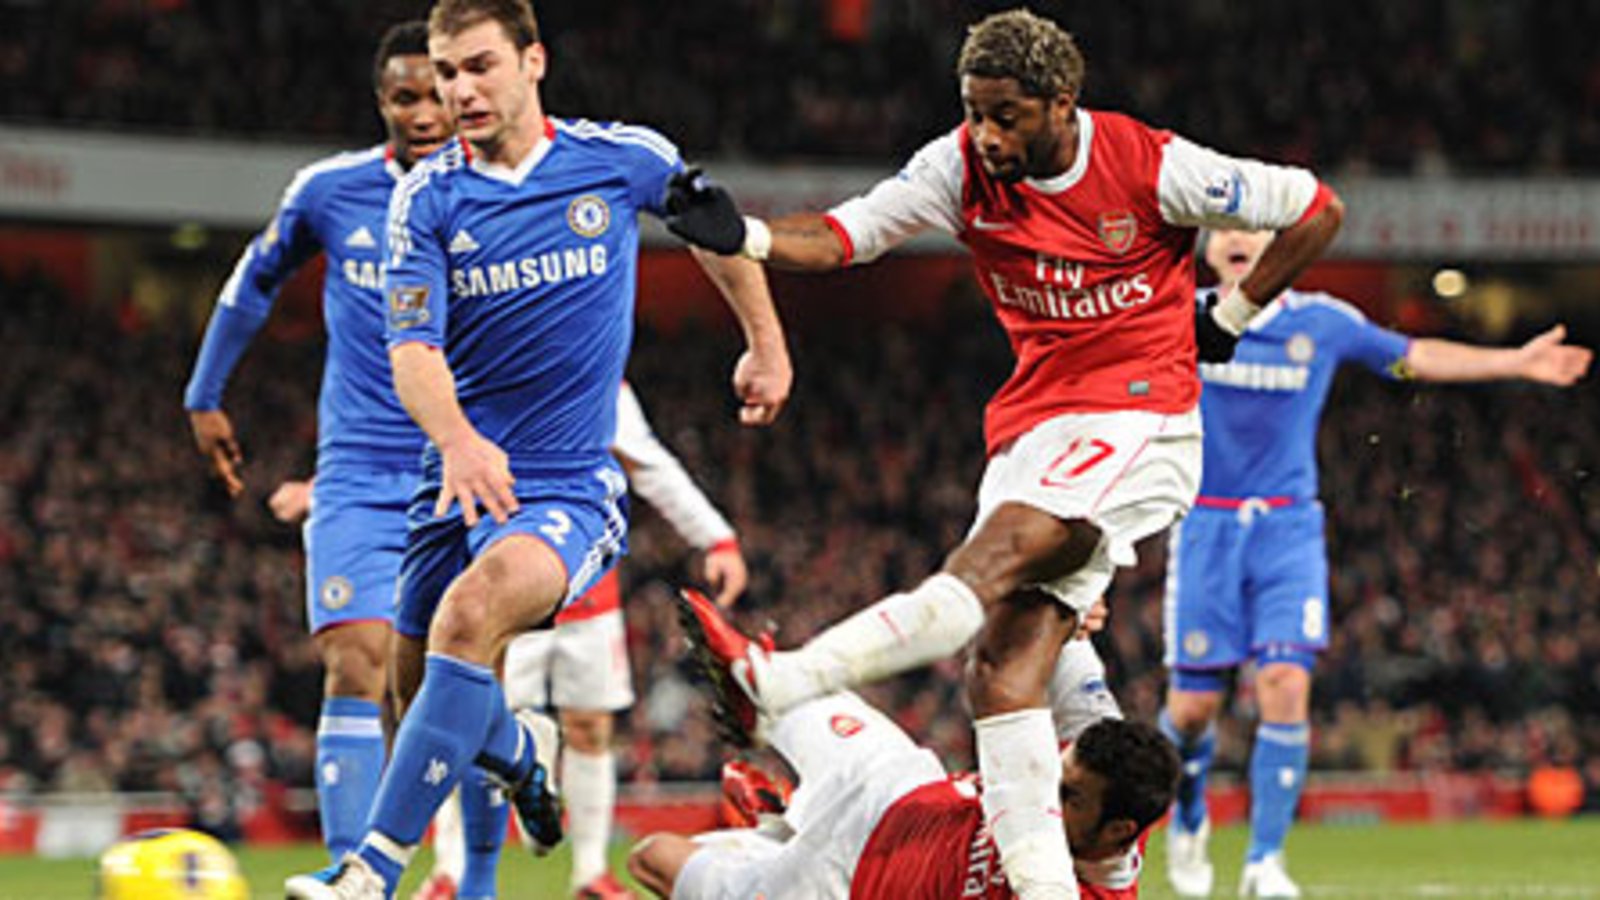 Arsenal 3 - 1 Chelsea - Match Report | Arsenal.com